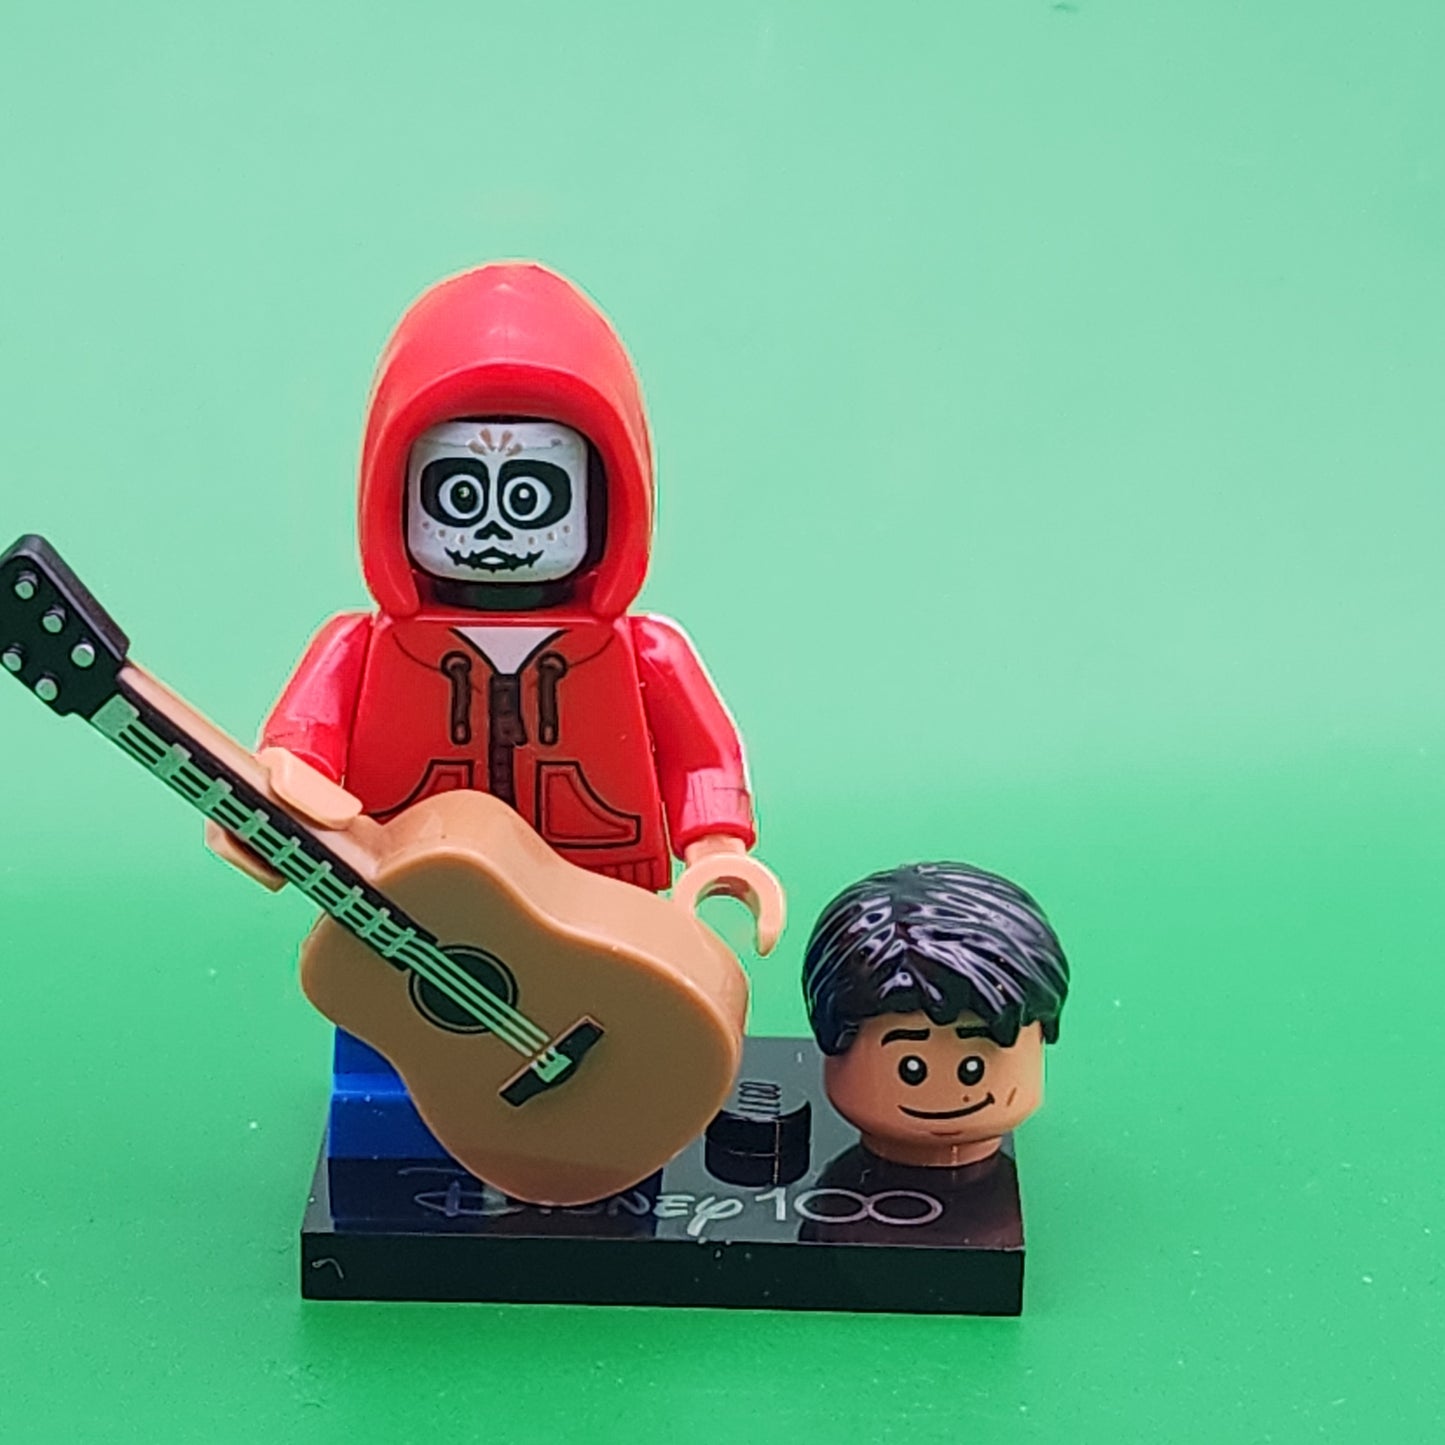 Lego Miguel Disney 100 Minifigure Guitar and extra Head